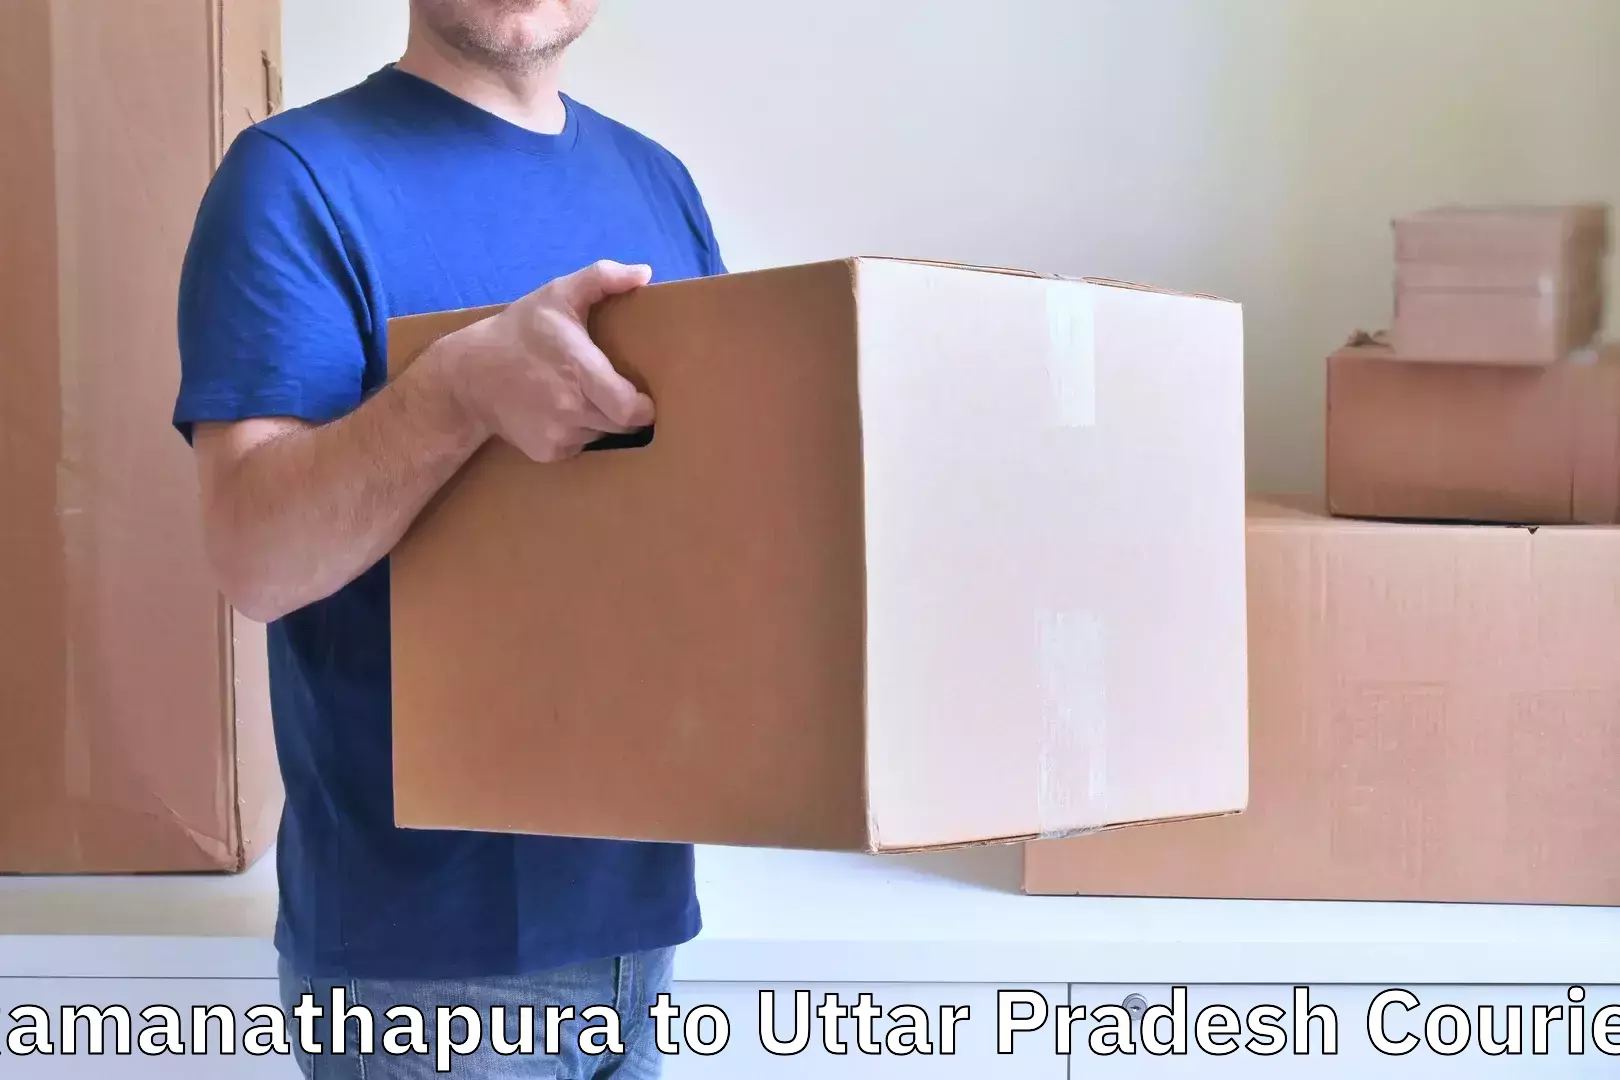 Luggage delivery app Ramanathapura to Aligarh